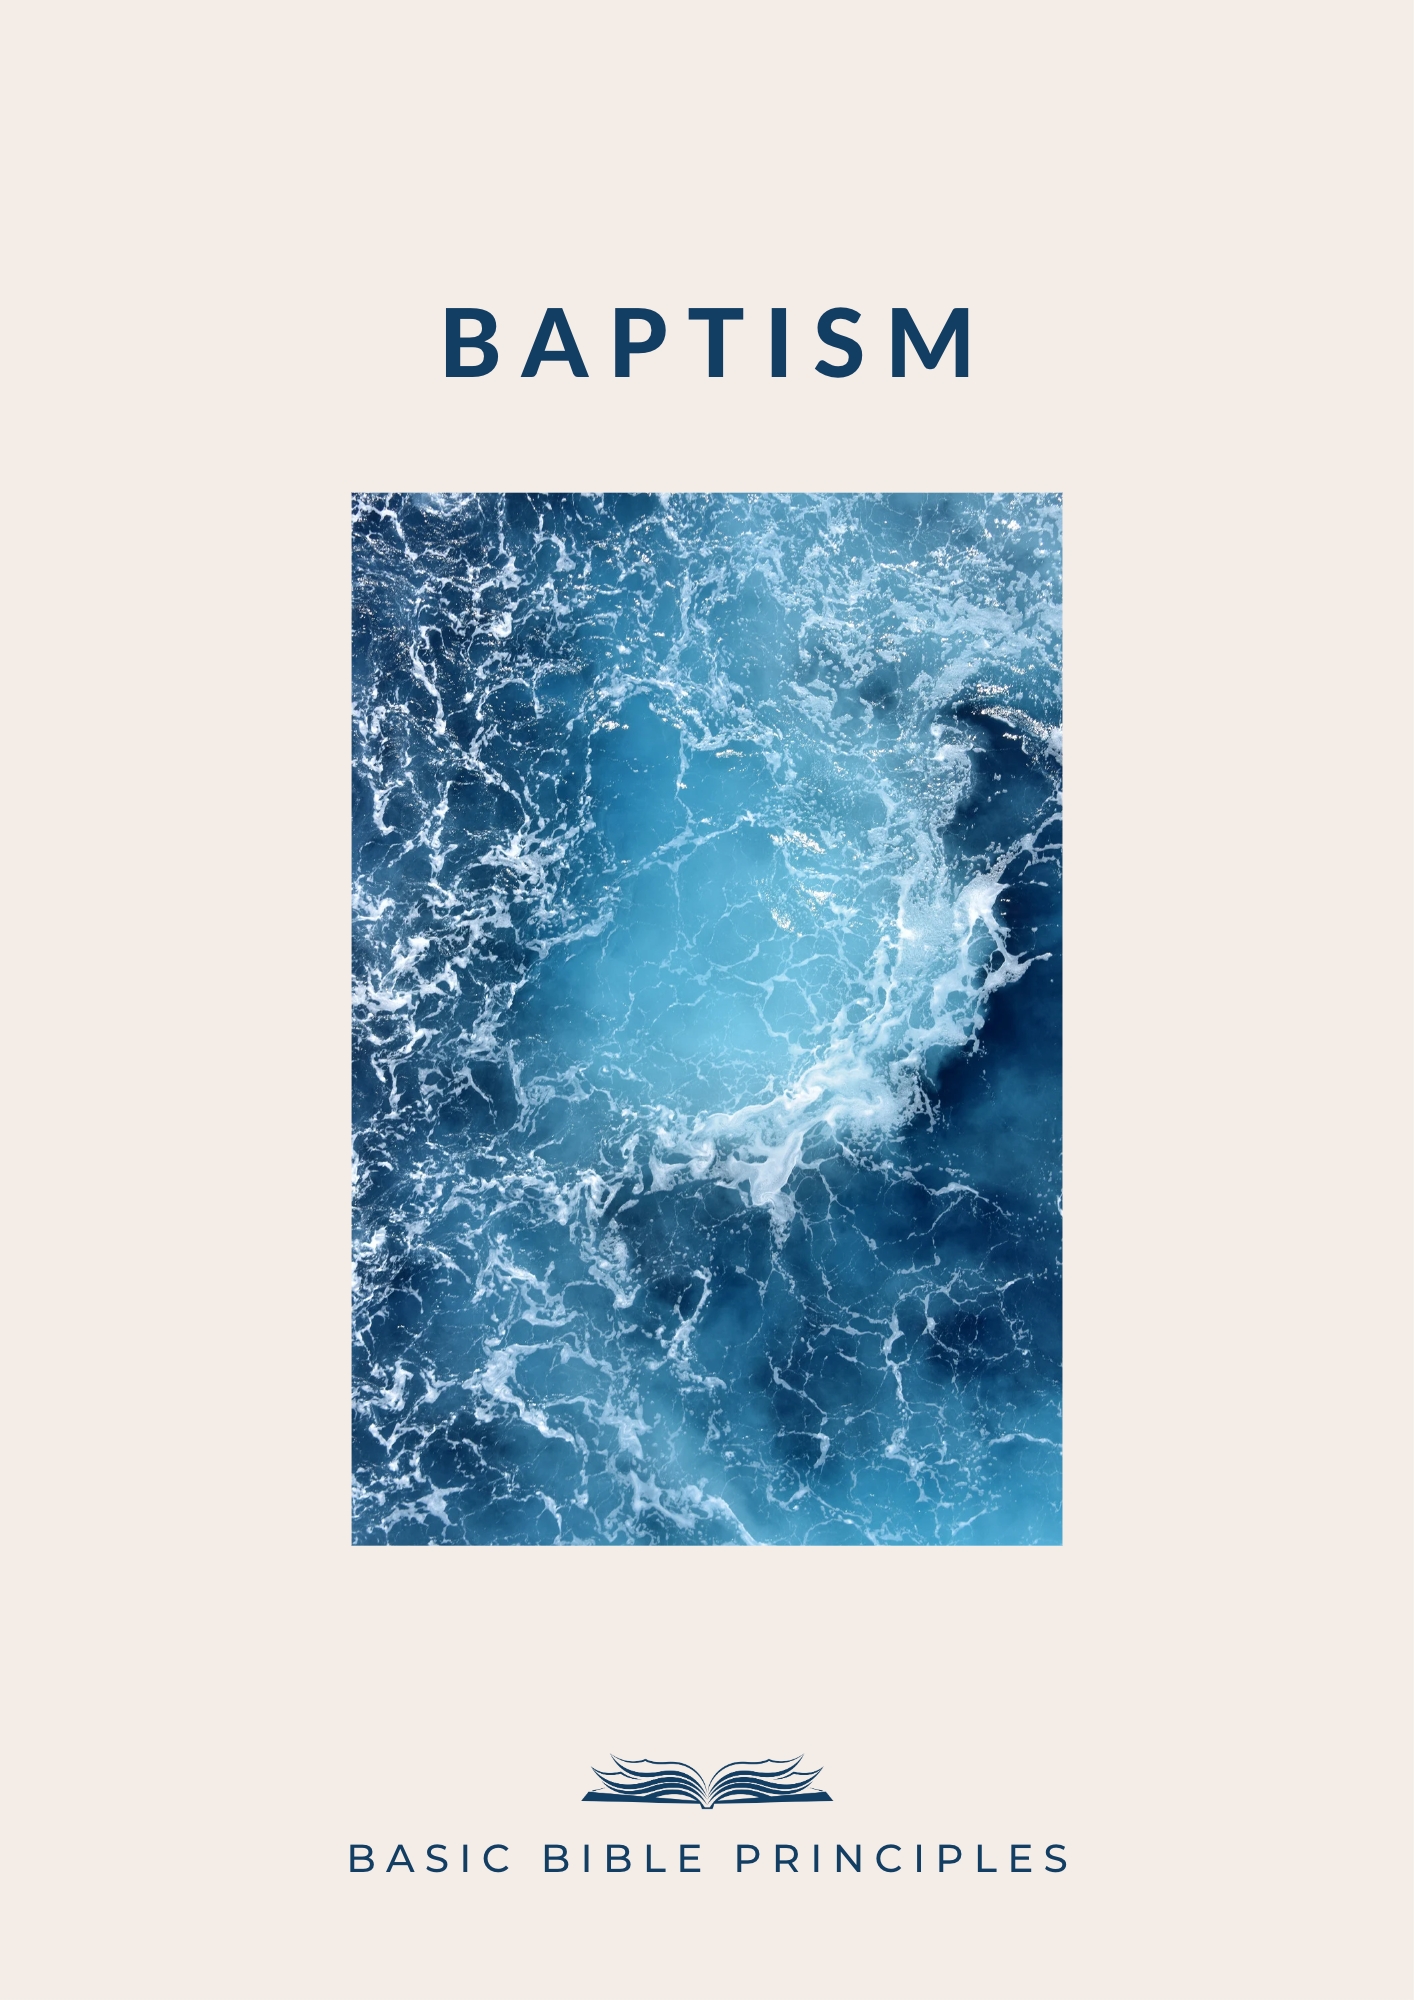 Basic Bible Principles: BAPTISM — ESSENTIAL  FOR SALVATION